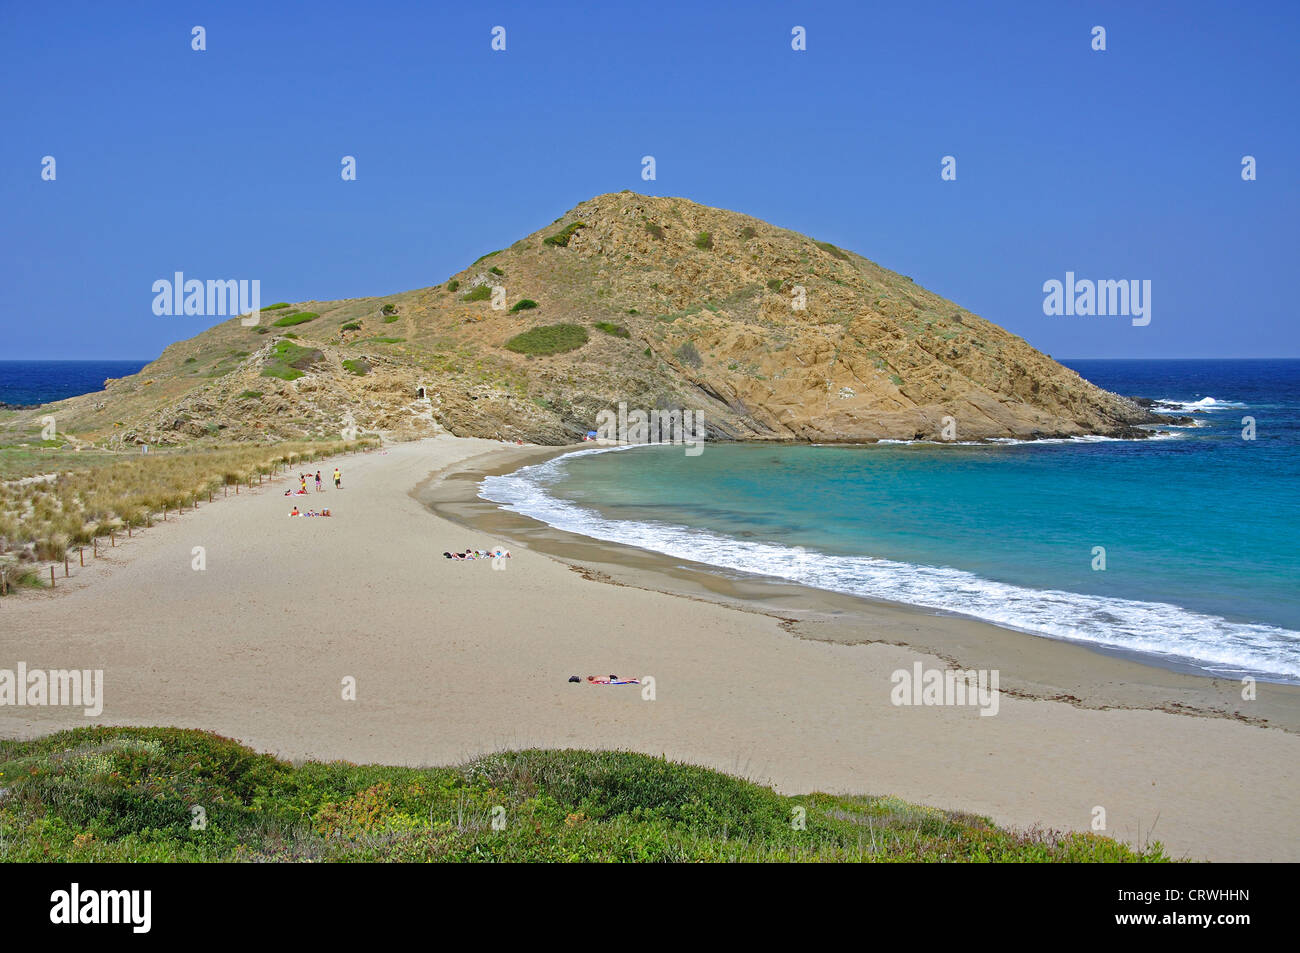 Beach view, Cala Mesquida, Menorca, Balearic Islands, Spain Stock Photo